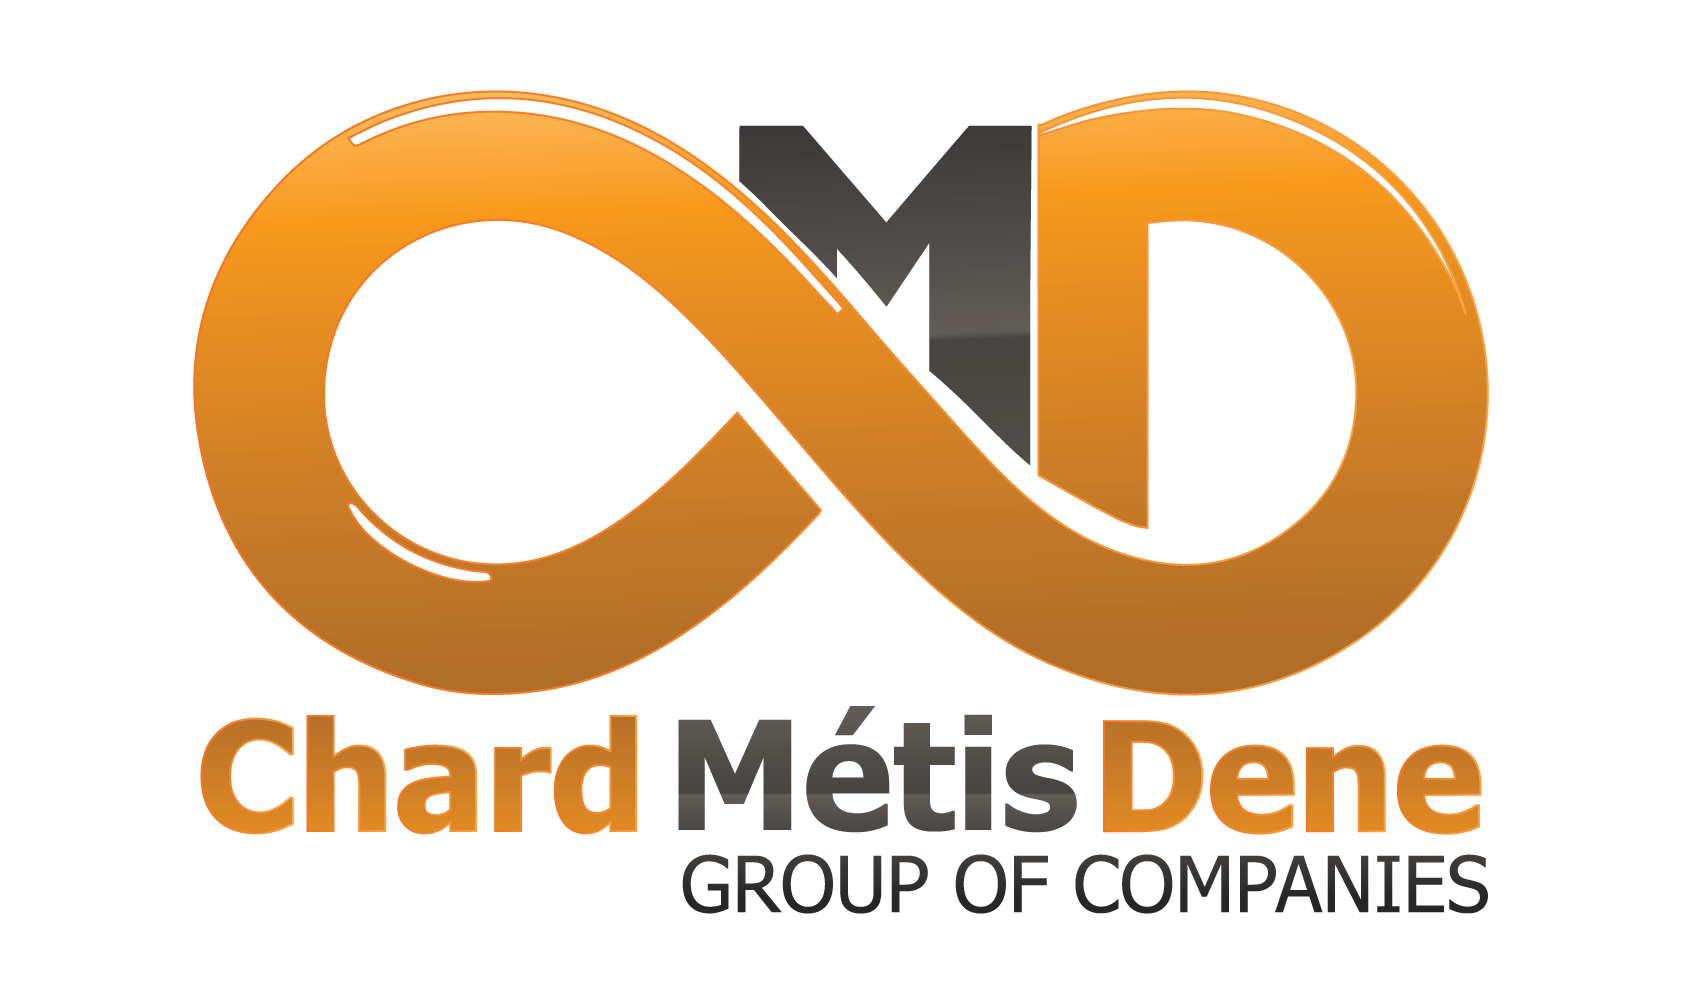 Chard Metis Dene Group of Companies